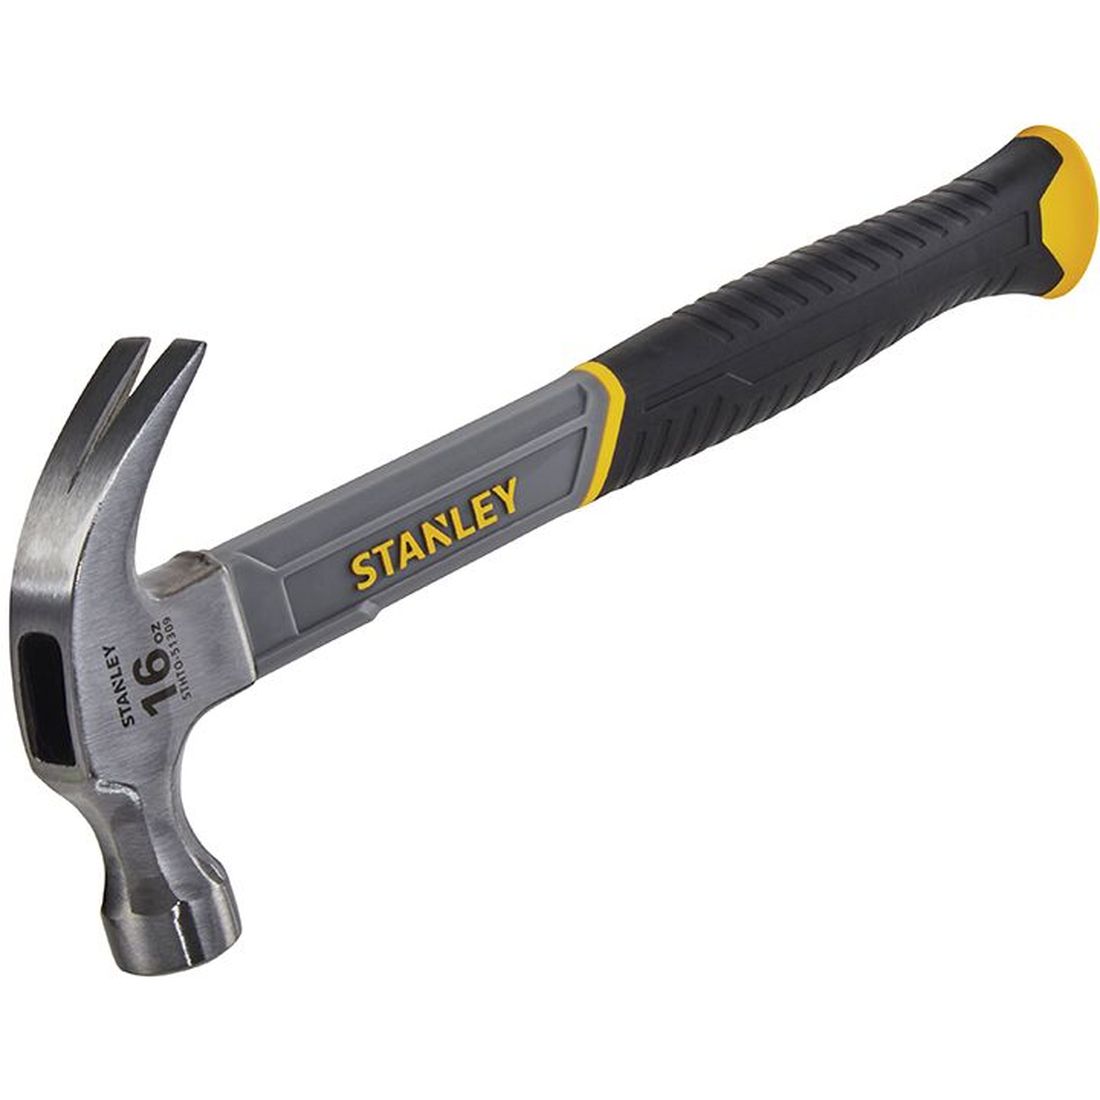 STANLEY Curved Claw Hammer Fibreglass Shaft 450g (16oz)                                 